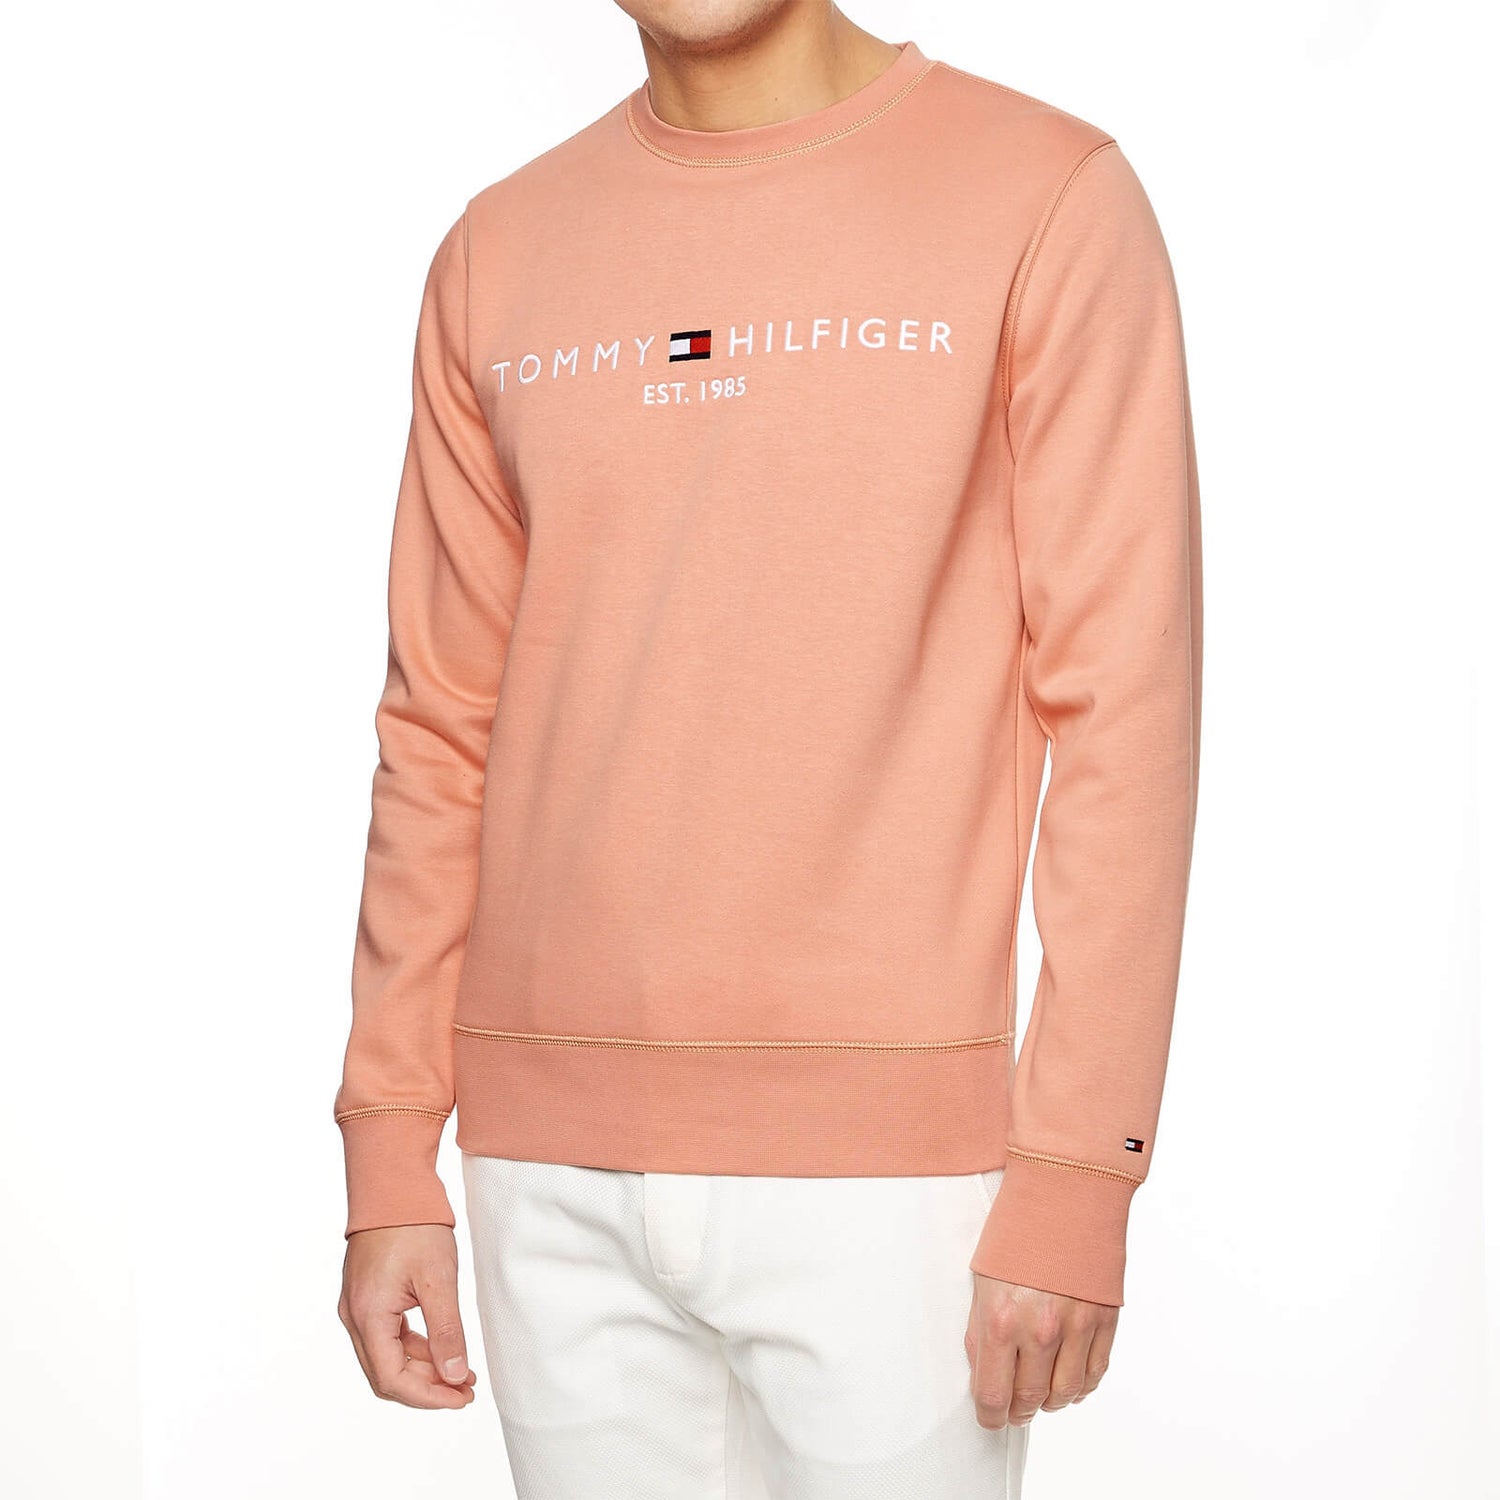 Tommy Hilfiger Men's Tommy Logo Sweatshirt - Light Pink - S